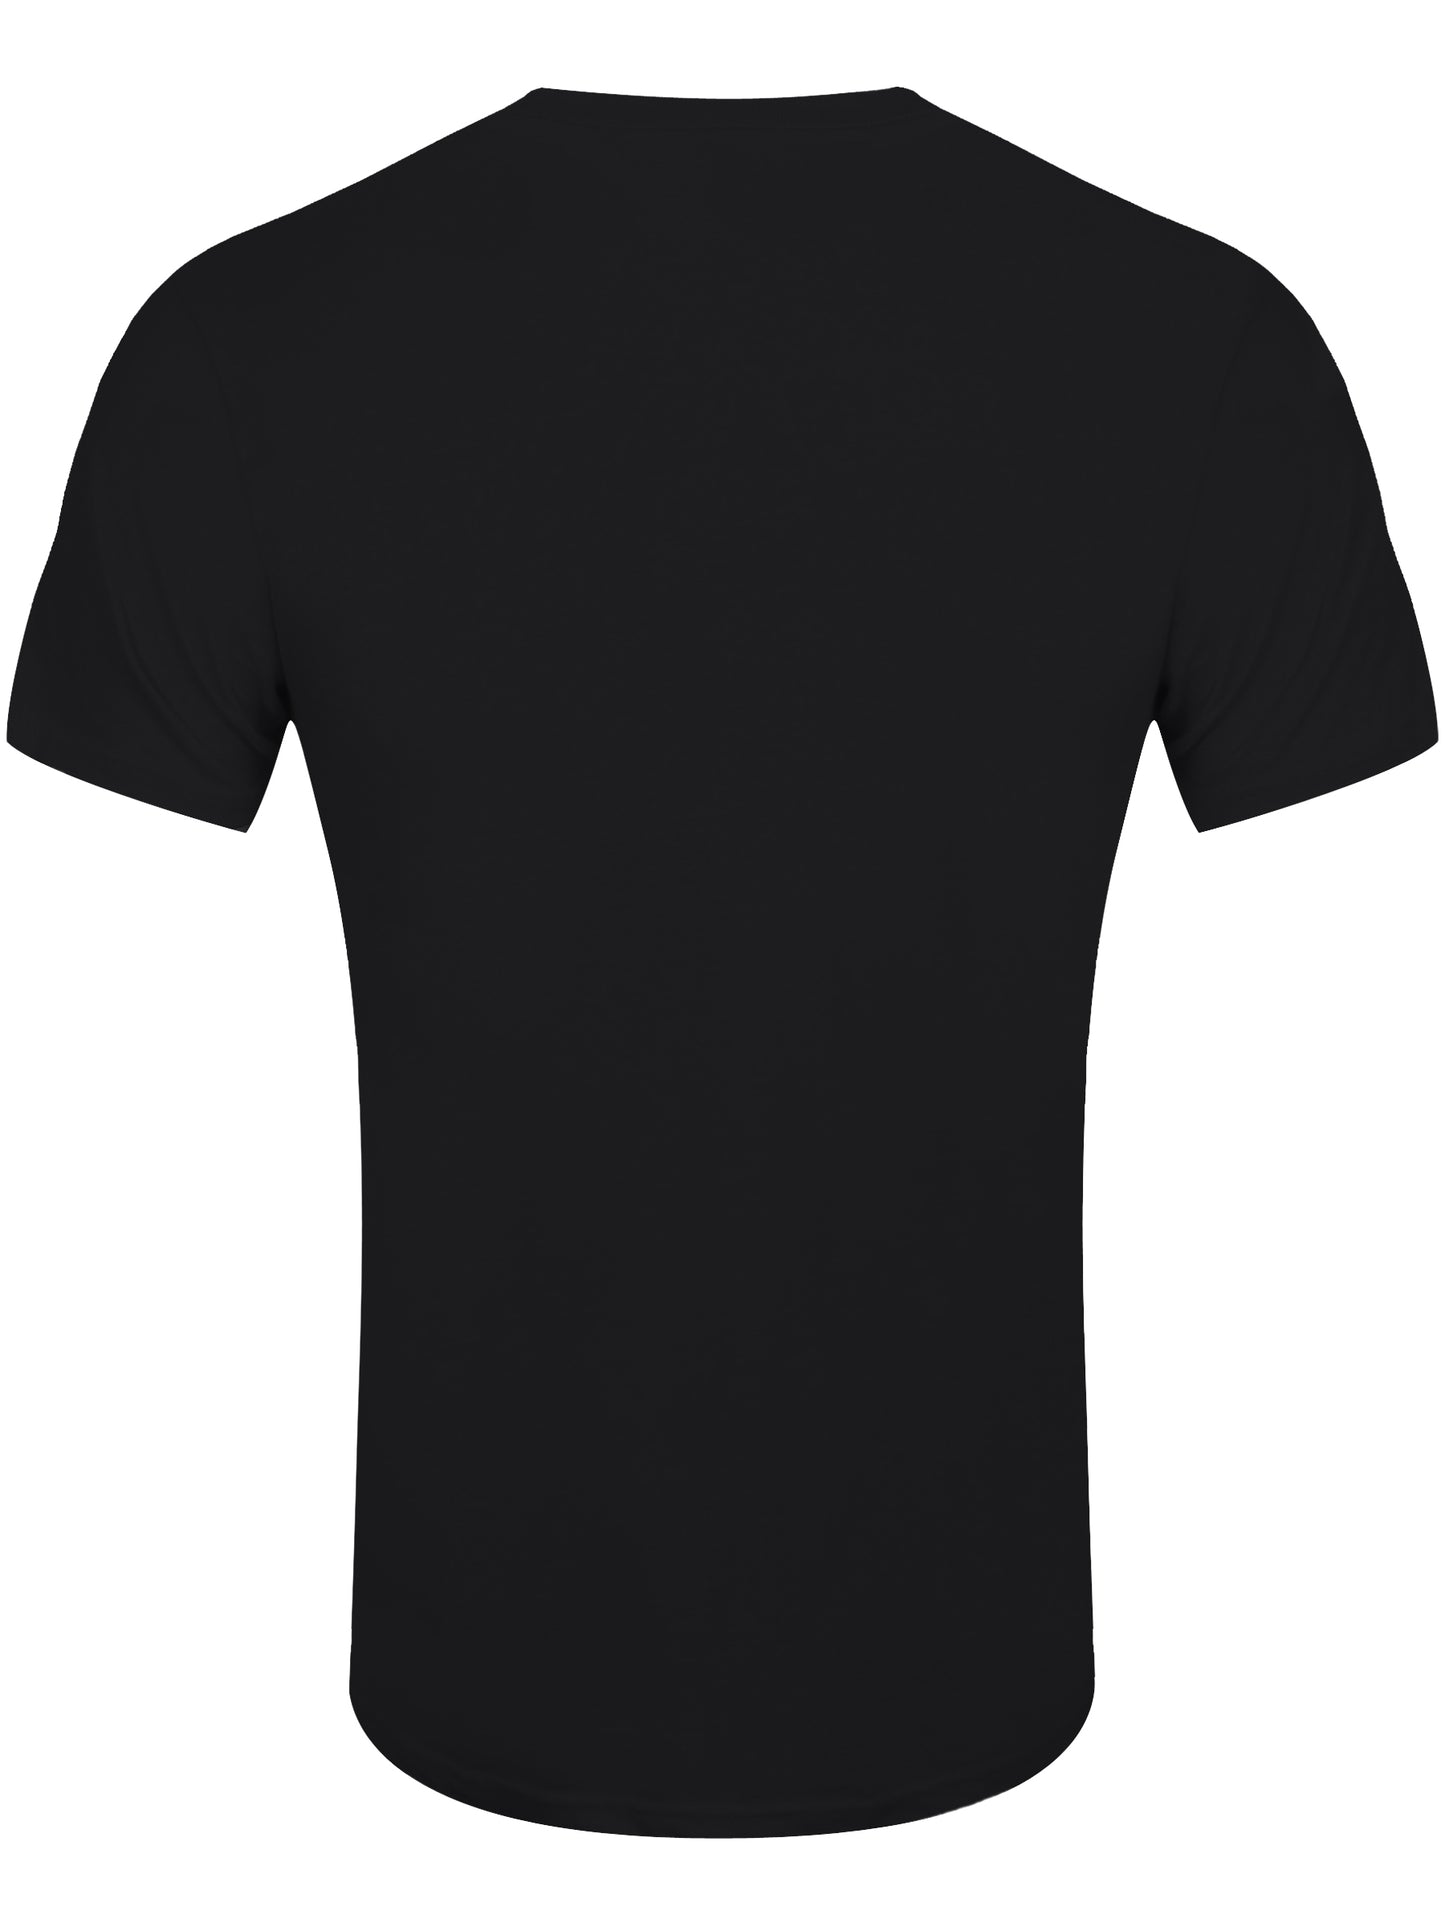 Star Wars Mandalorian Men's Black T-Shirt